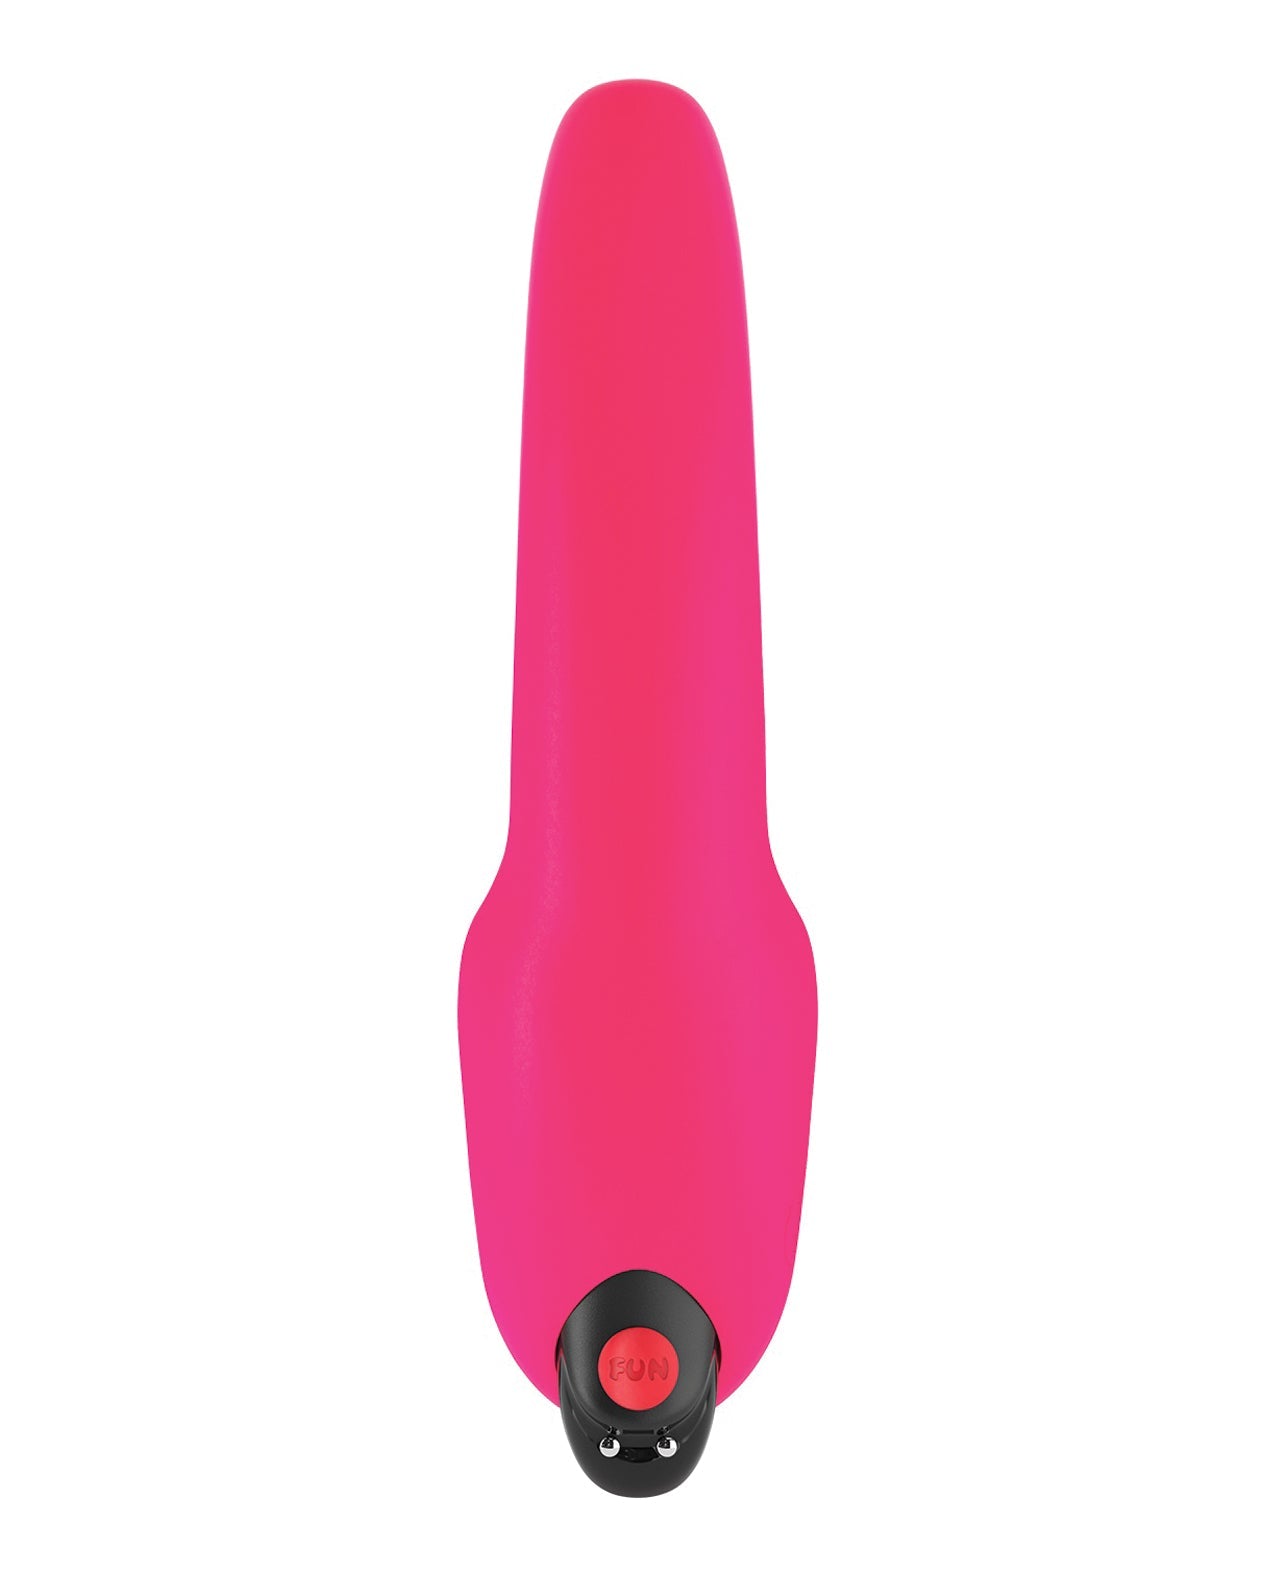 Fun Factory Sharevibe Vibrating Wearable Dildo - Pink